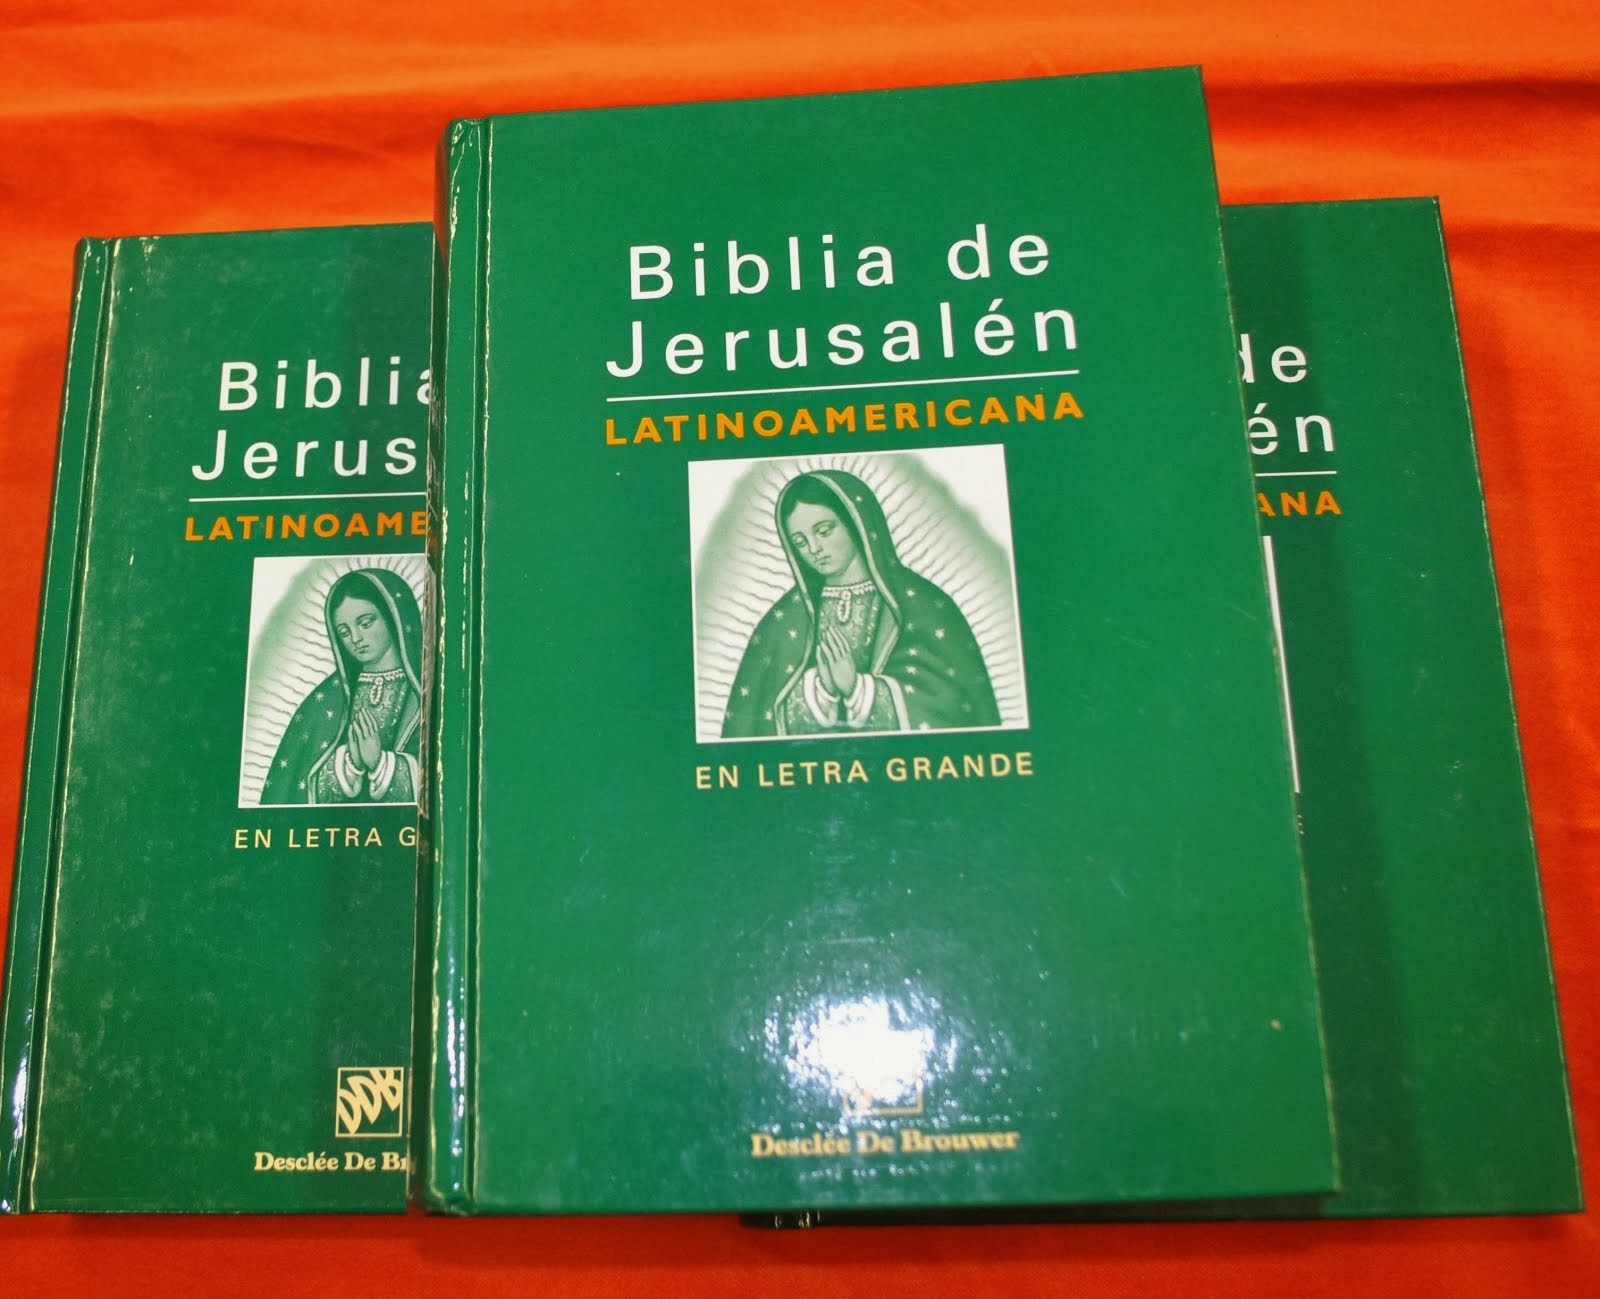 Biblia de Jesusalen Latinoamericana